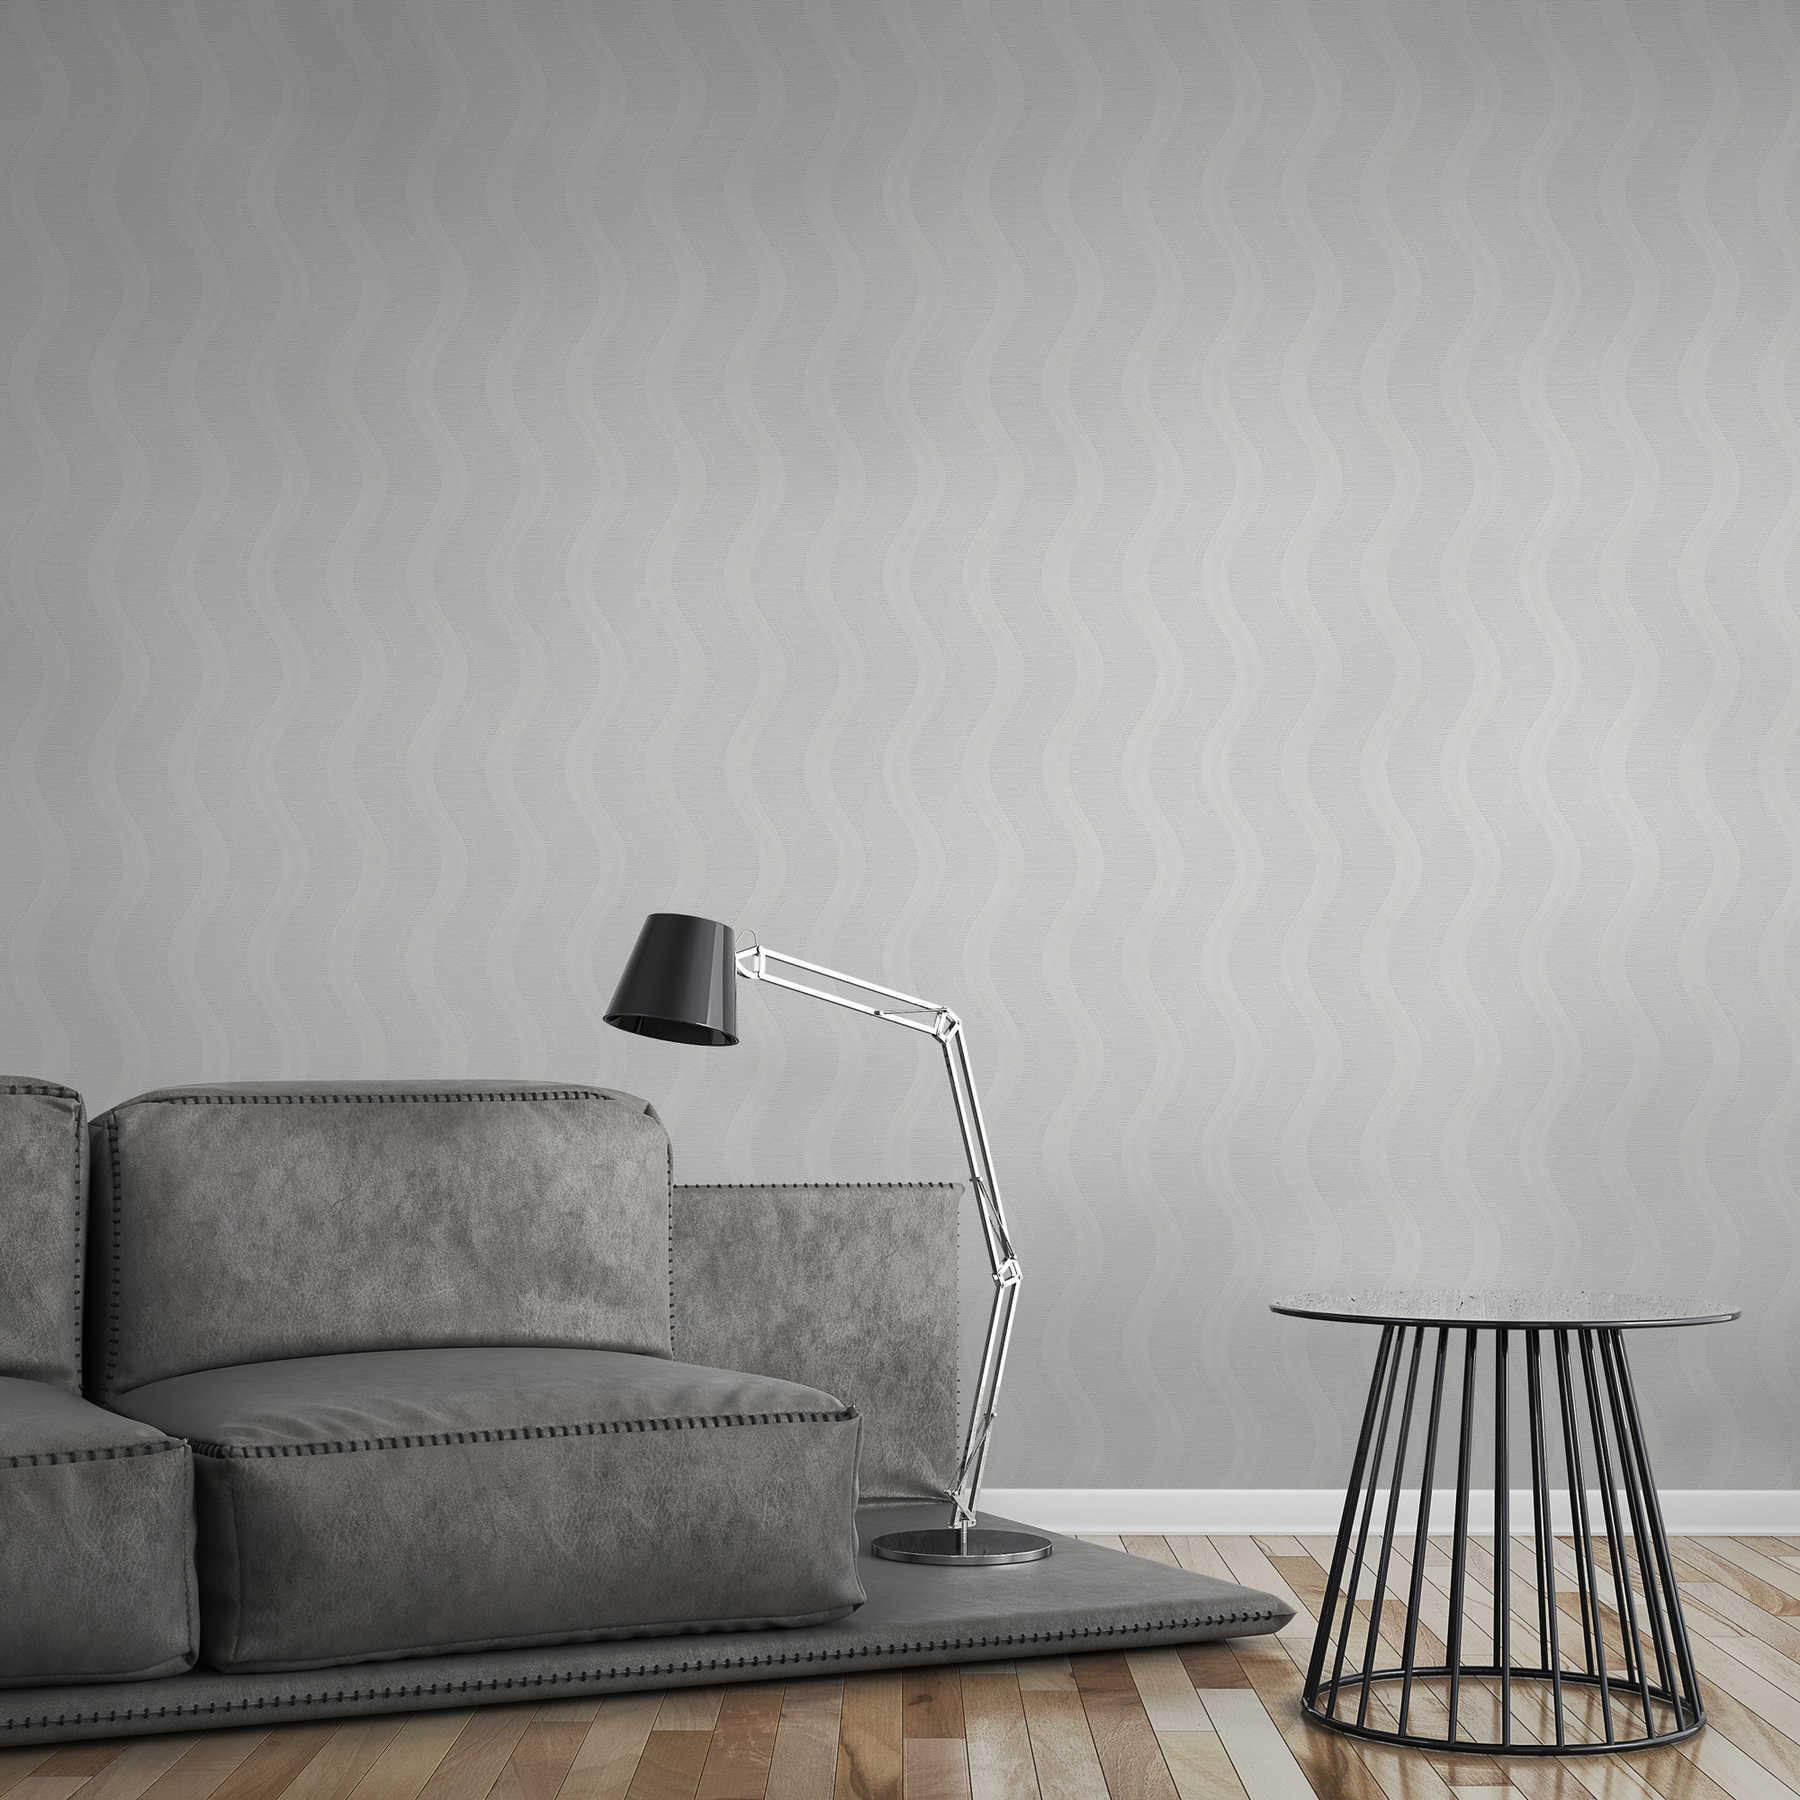             Retro wallpaper white with geometric wave pattern - white
        